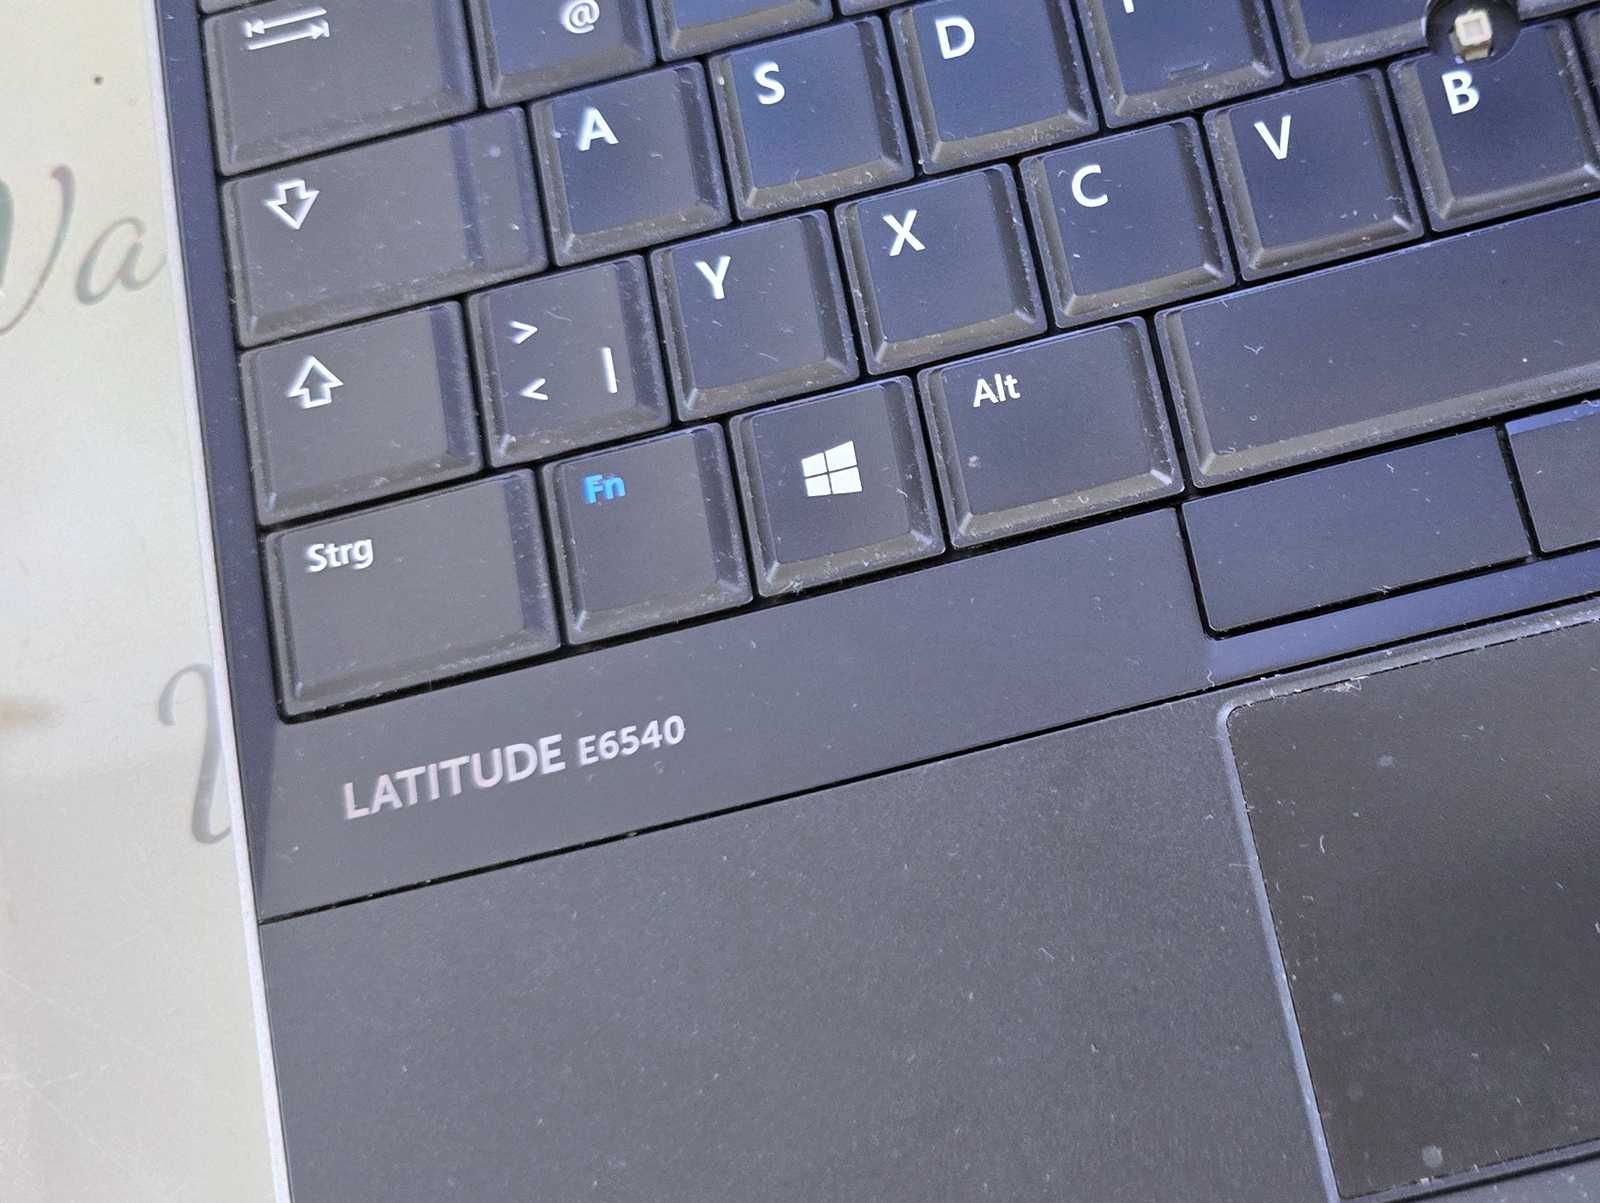 Laptop core i5 gen4 - Dell Latitude E6540 - 15.6 - functional perfect